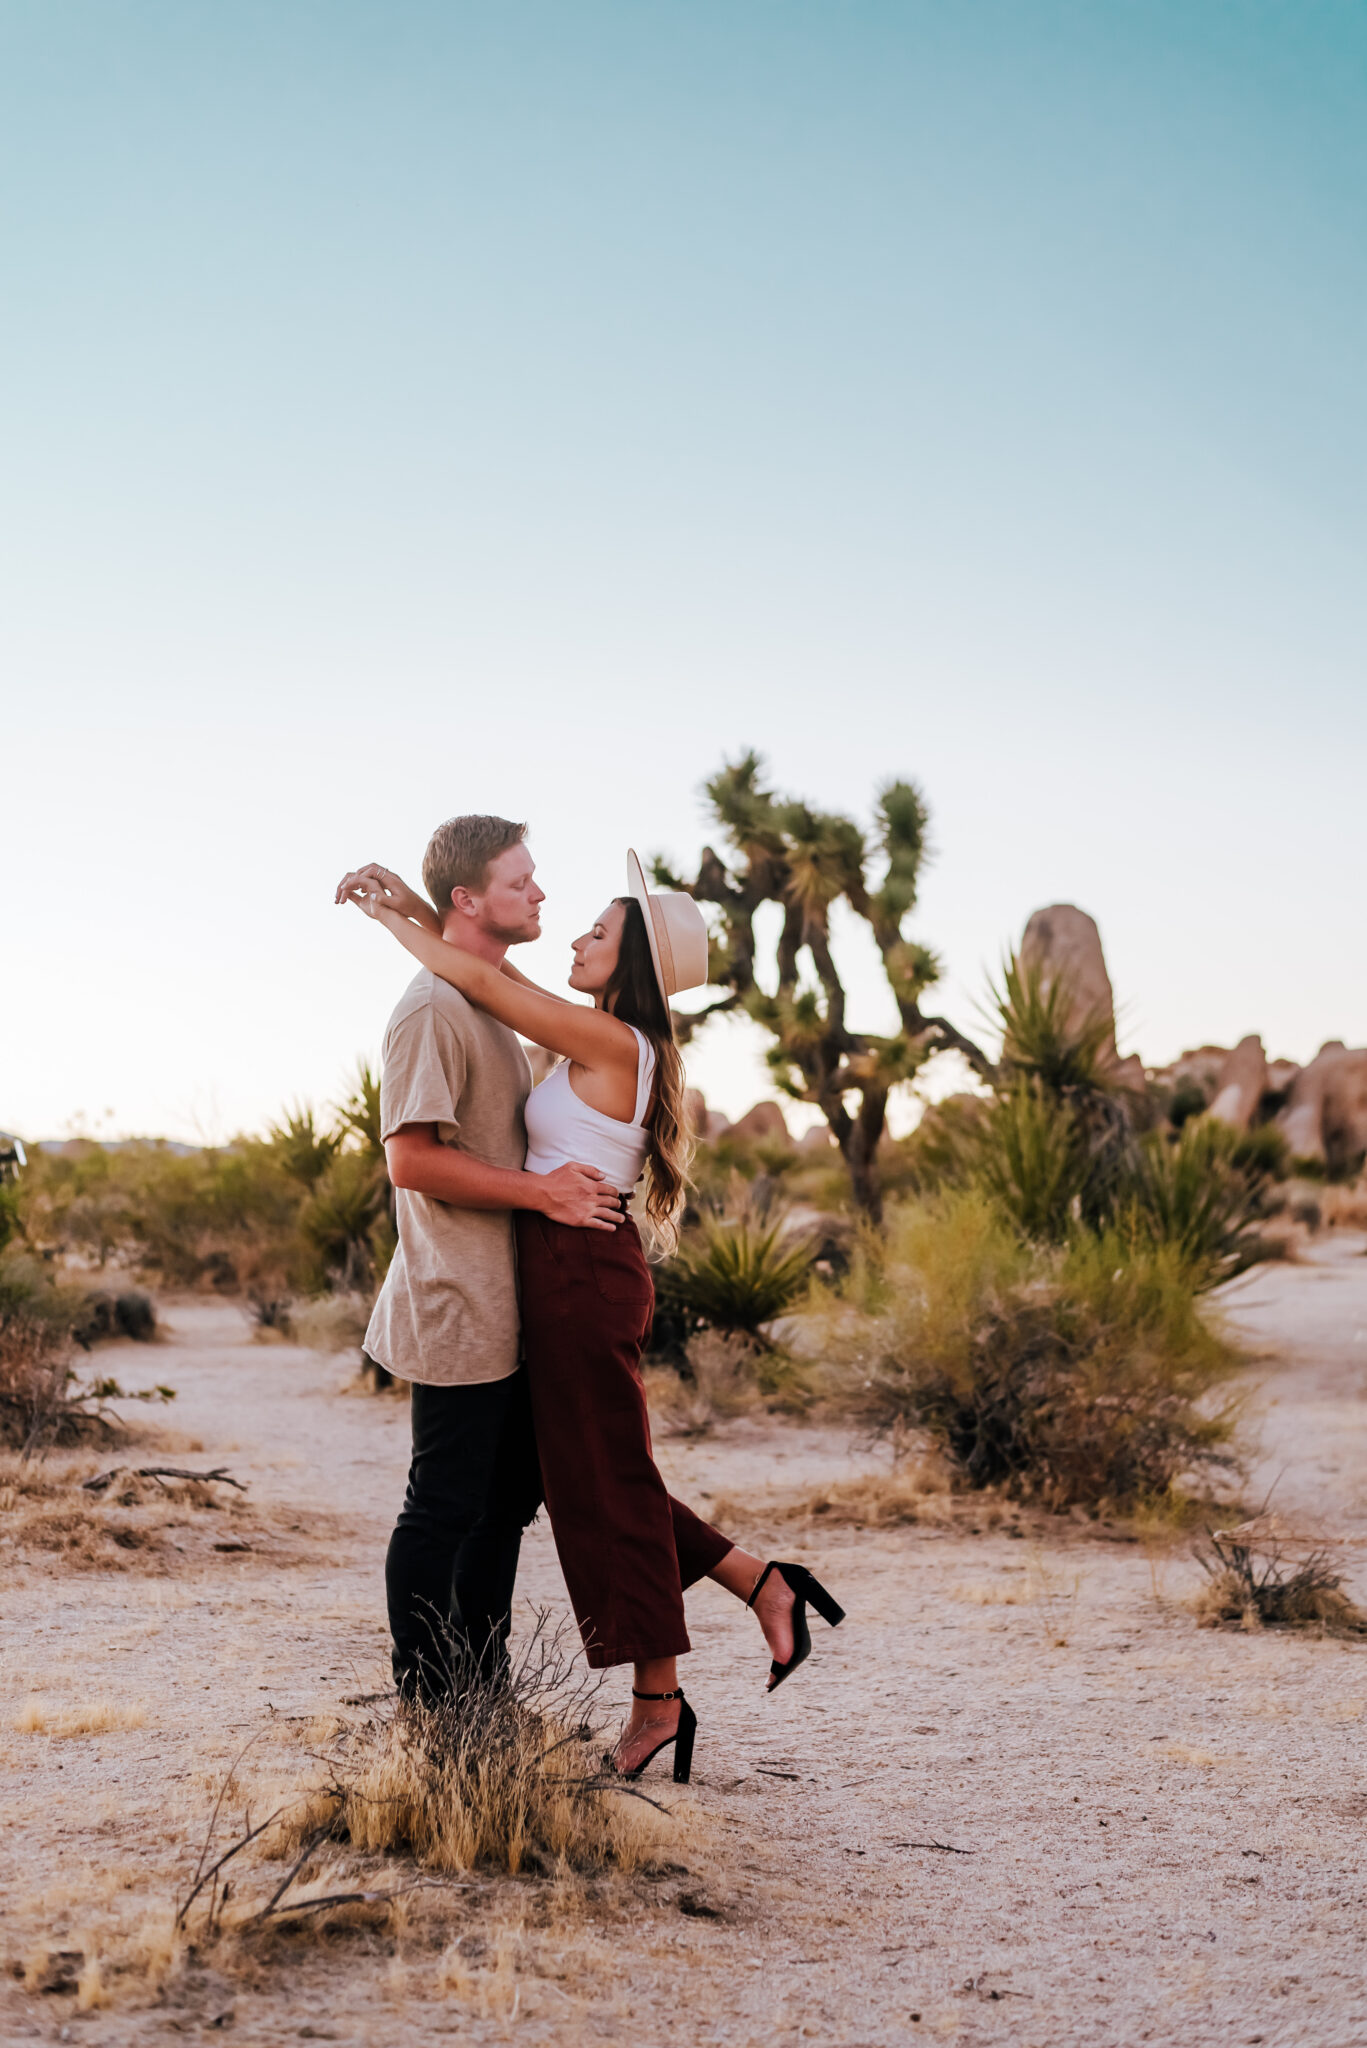 Couple embraces in front of desert landscape